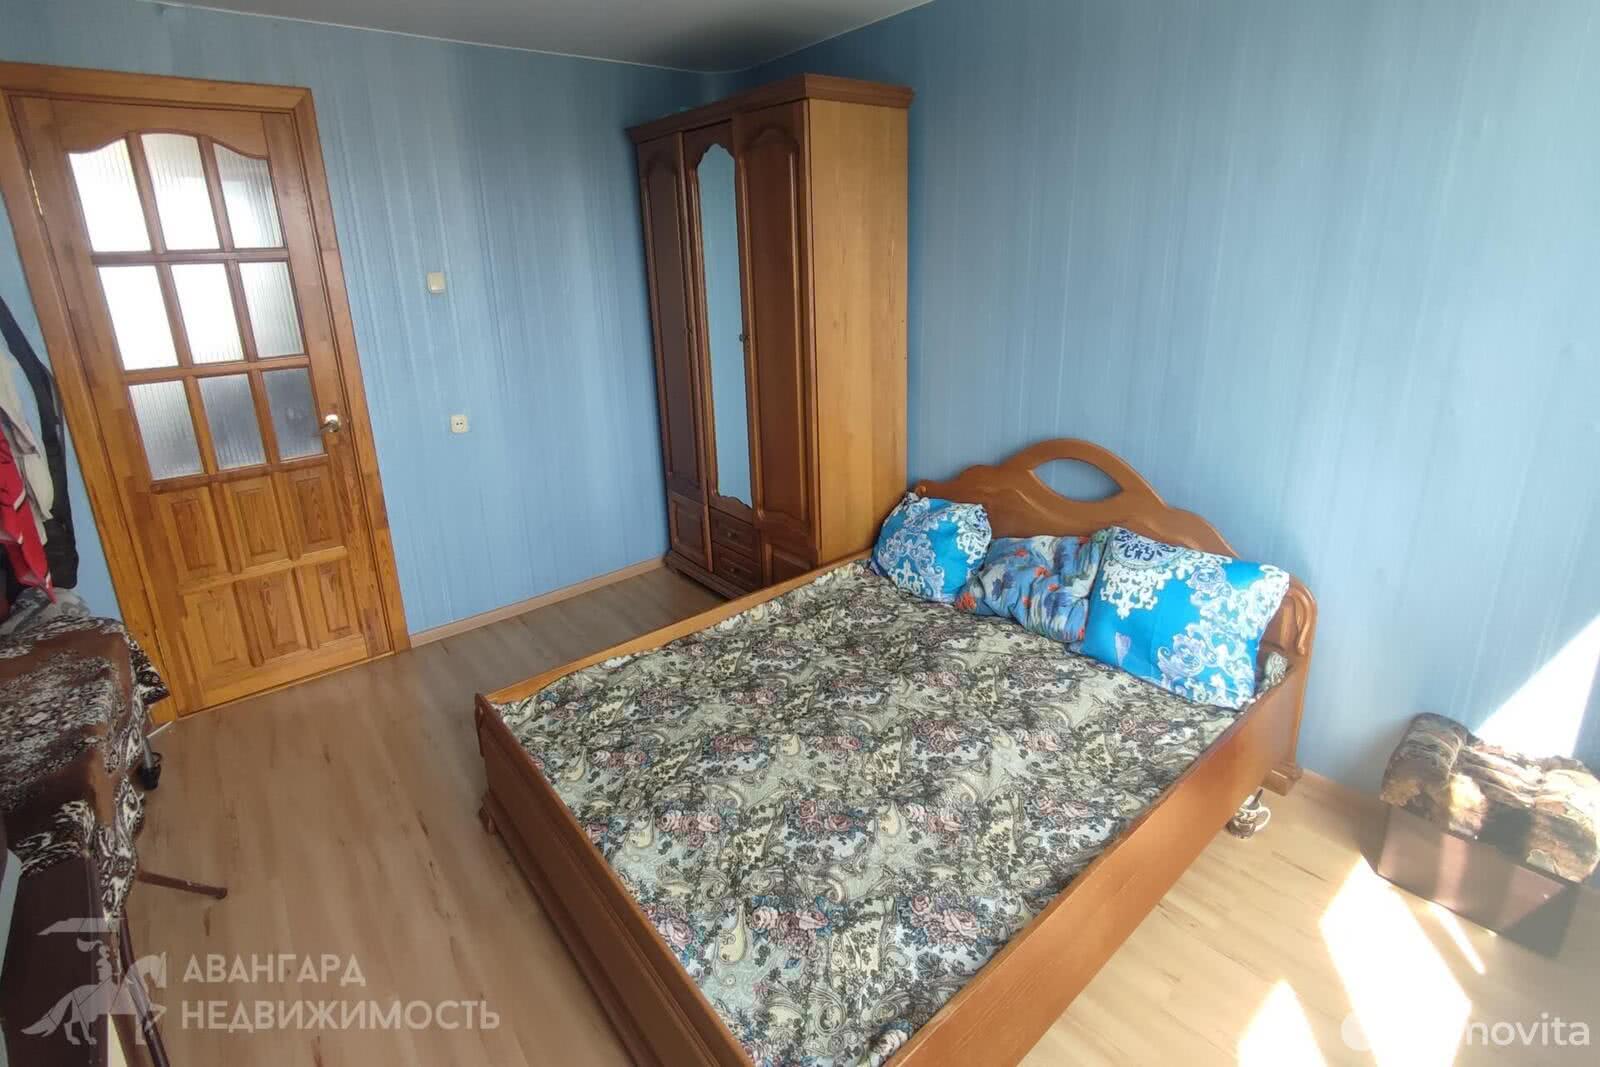 комната, Минск, ул. Ротмистрова, д. 6, стоимость продажи 88 457 р.